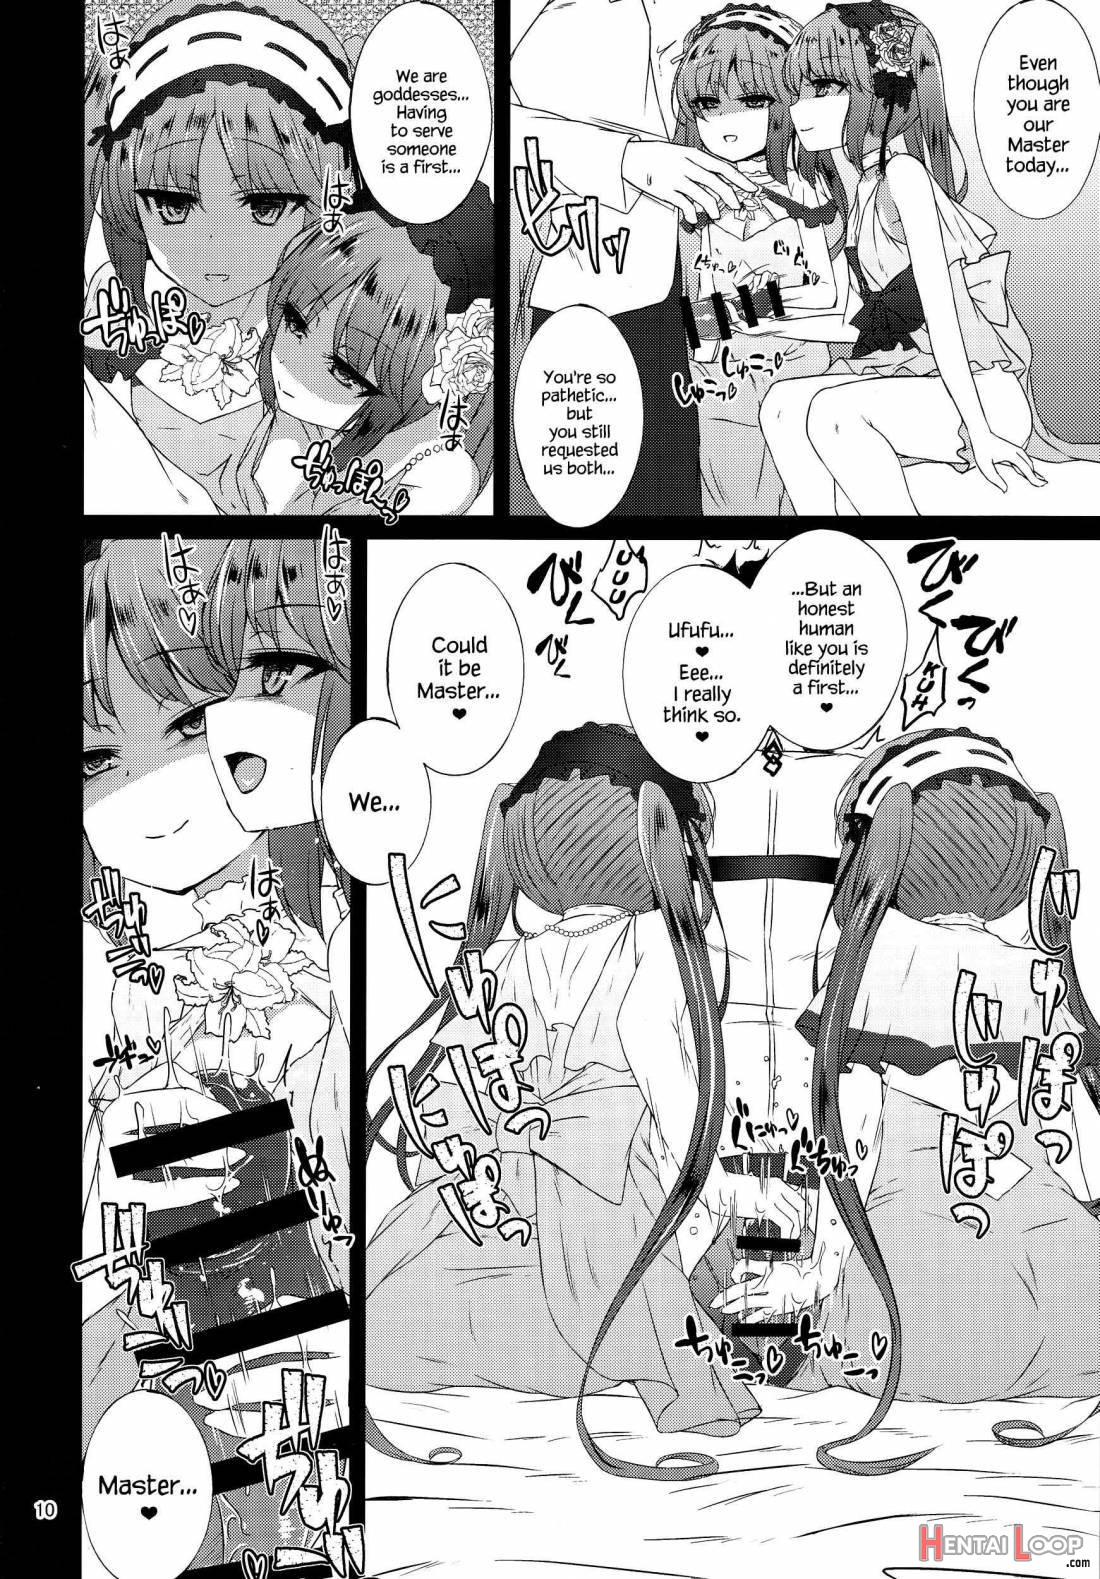 Megami No Itazura page 8